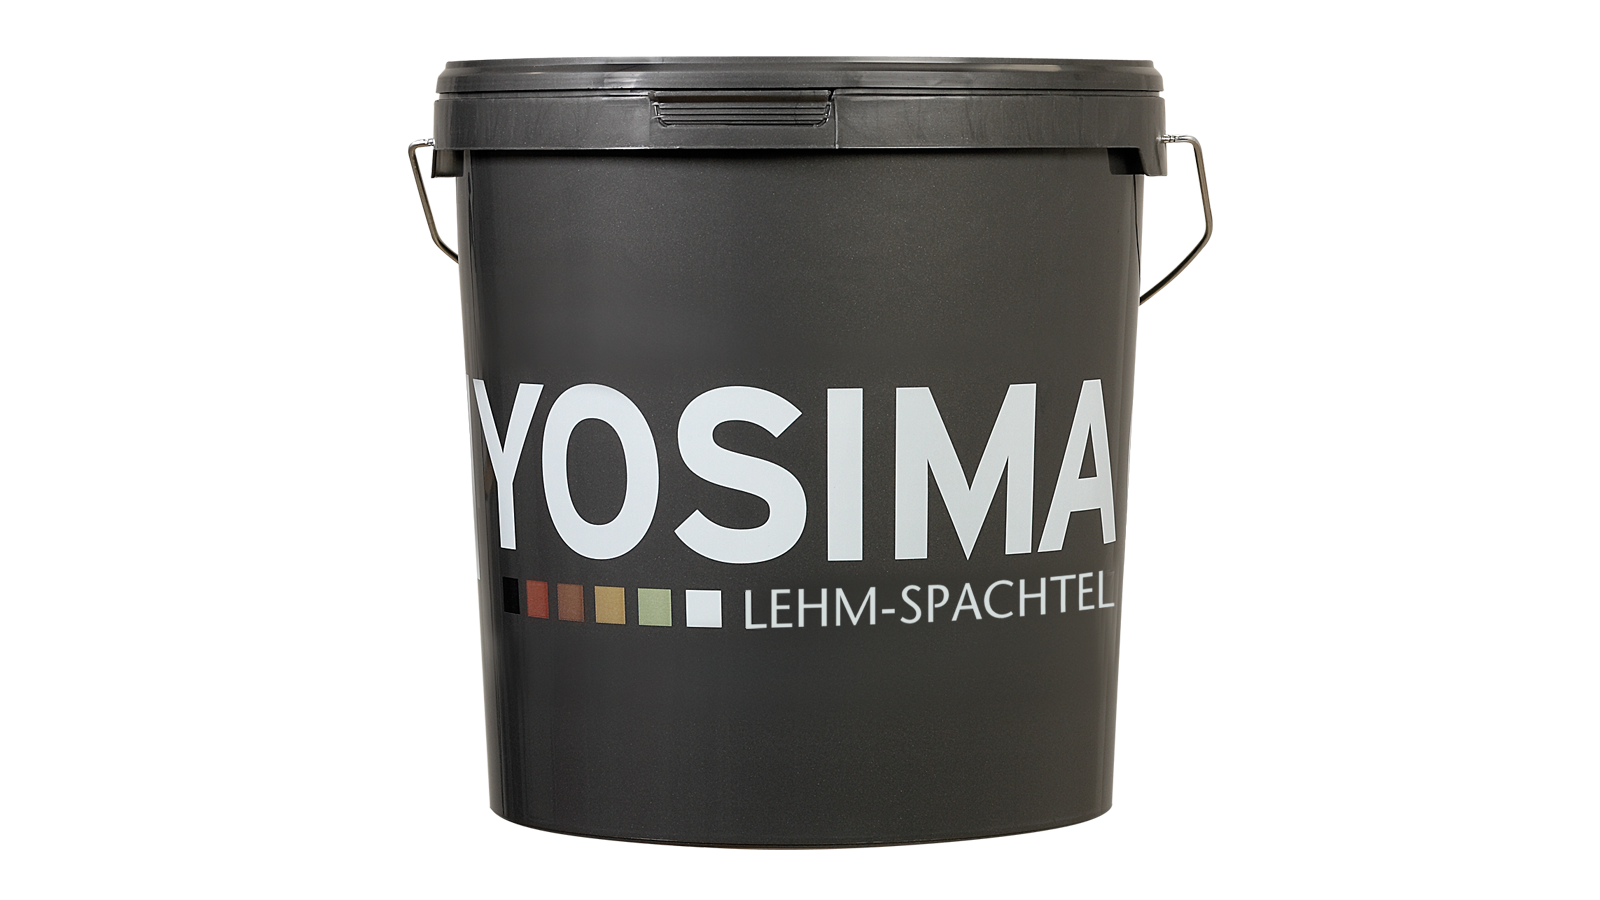 YOSIMA Lehm-Farbspachtel Eimer